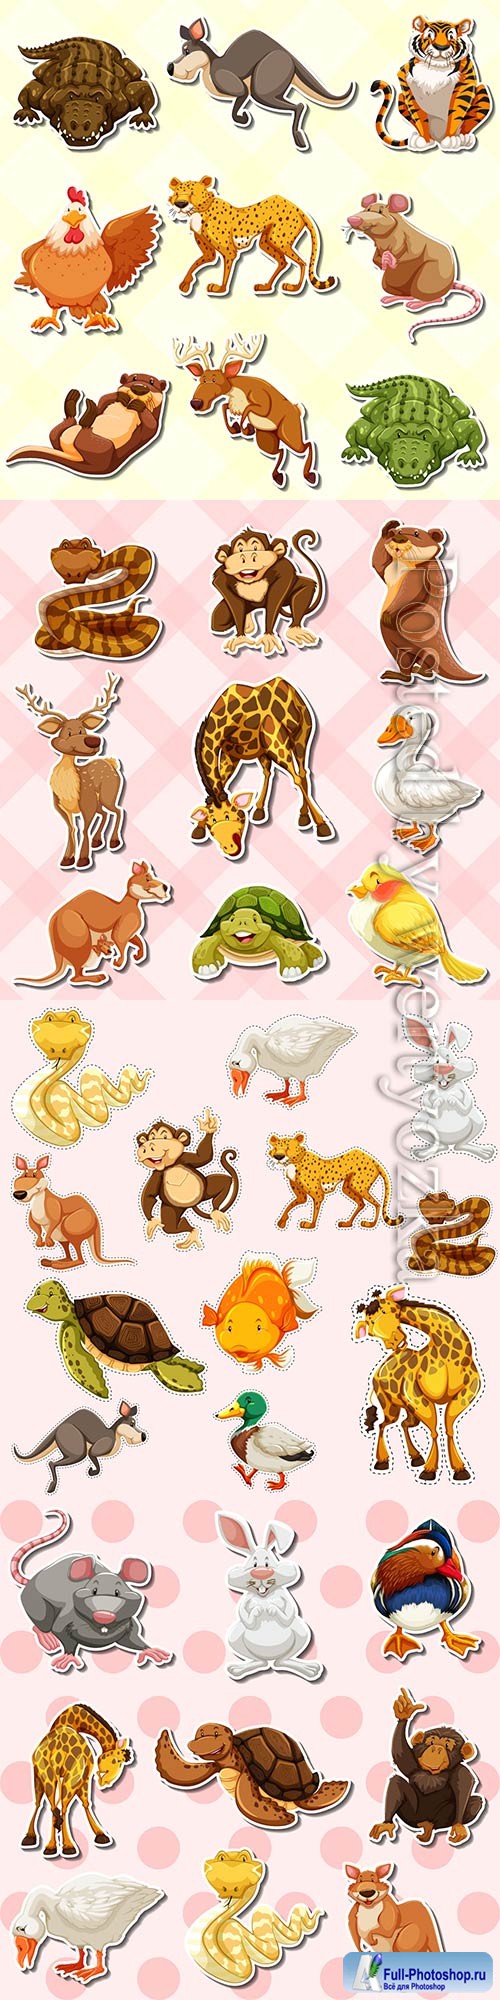 Sticker set with cute animals # 2